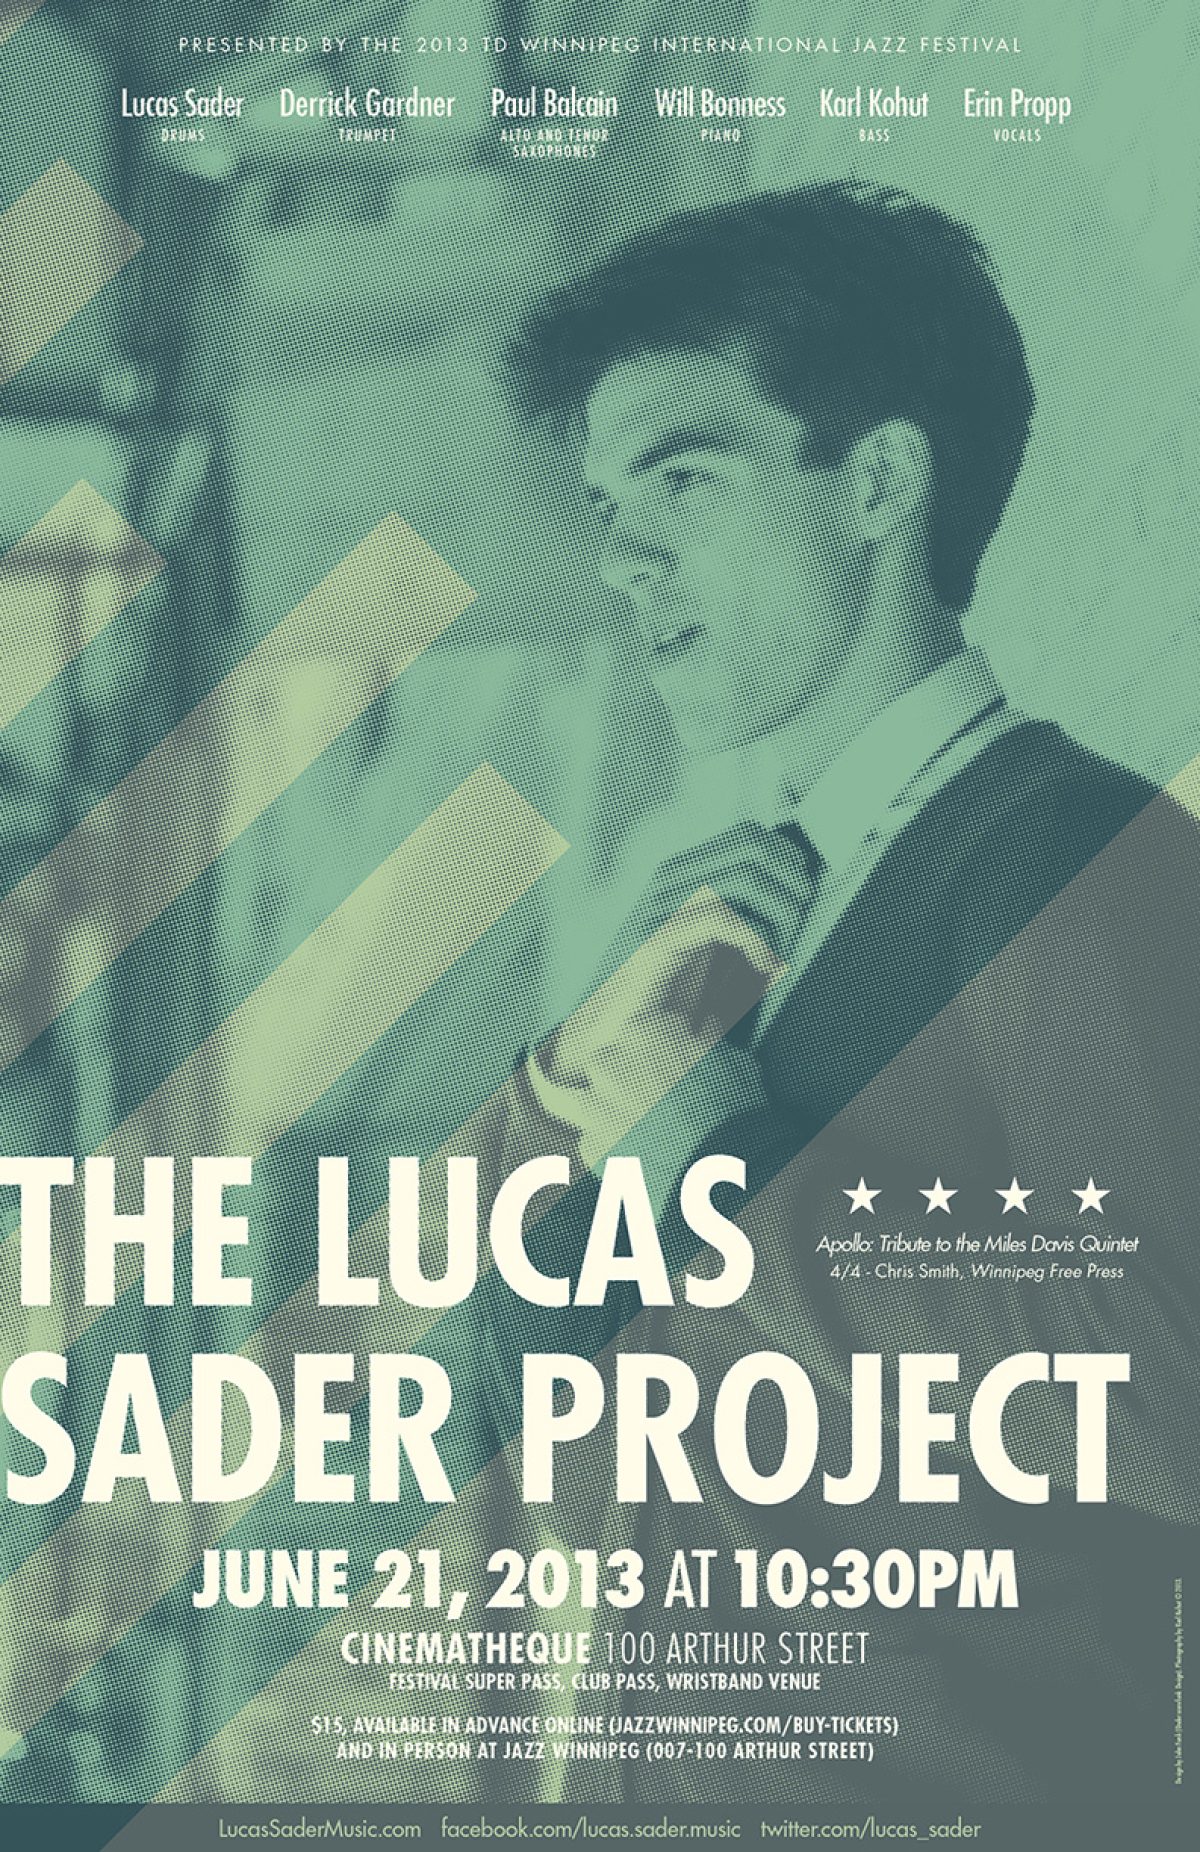 LSA_014_Lucas_Sader_Project_2013JazzFest